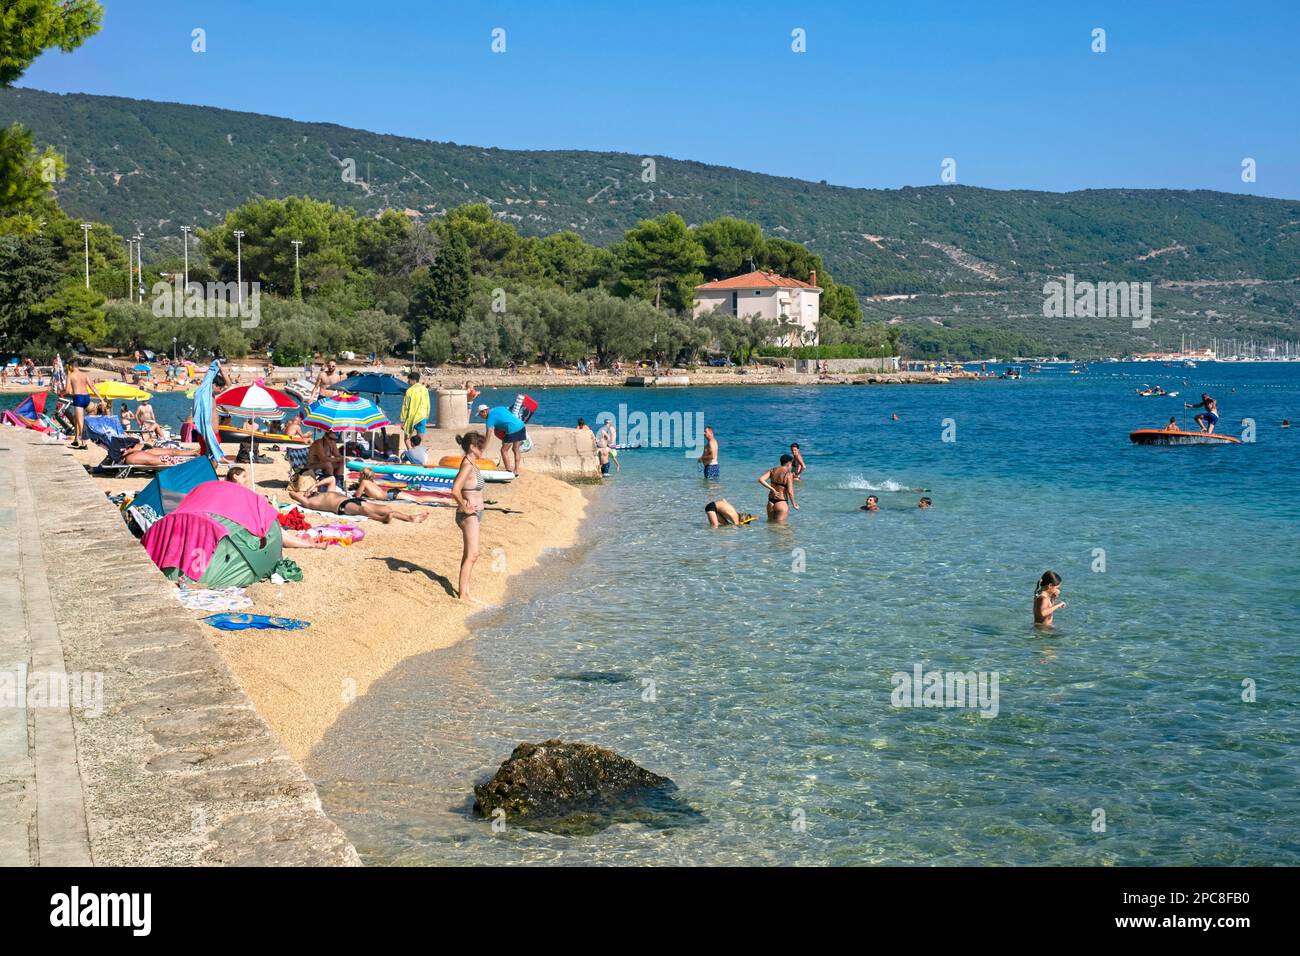 Sunbathers on sandy beach and tourists swimming in the Adriatic Sea near Cres on the island Cherso, Kvarner Bay, Primorje-Gorski Kotar, Croatia Stock Photo